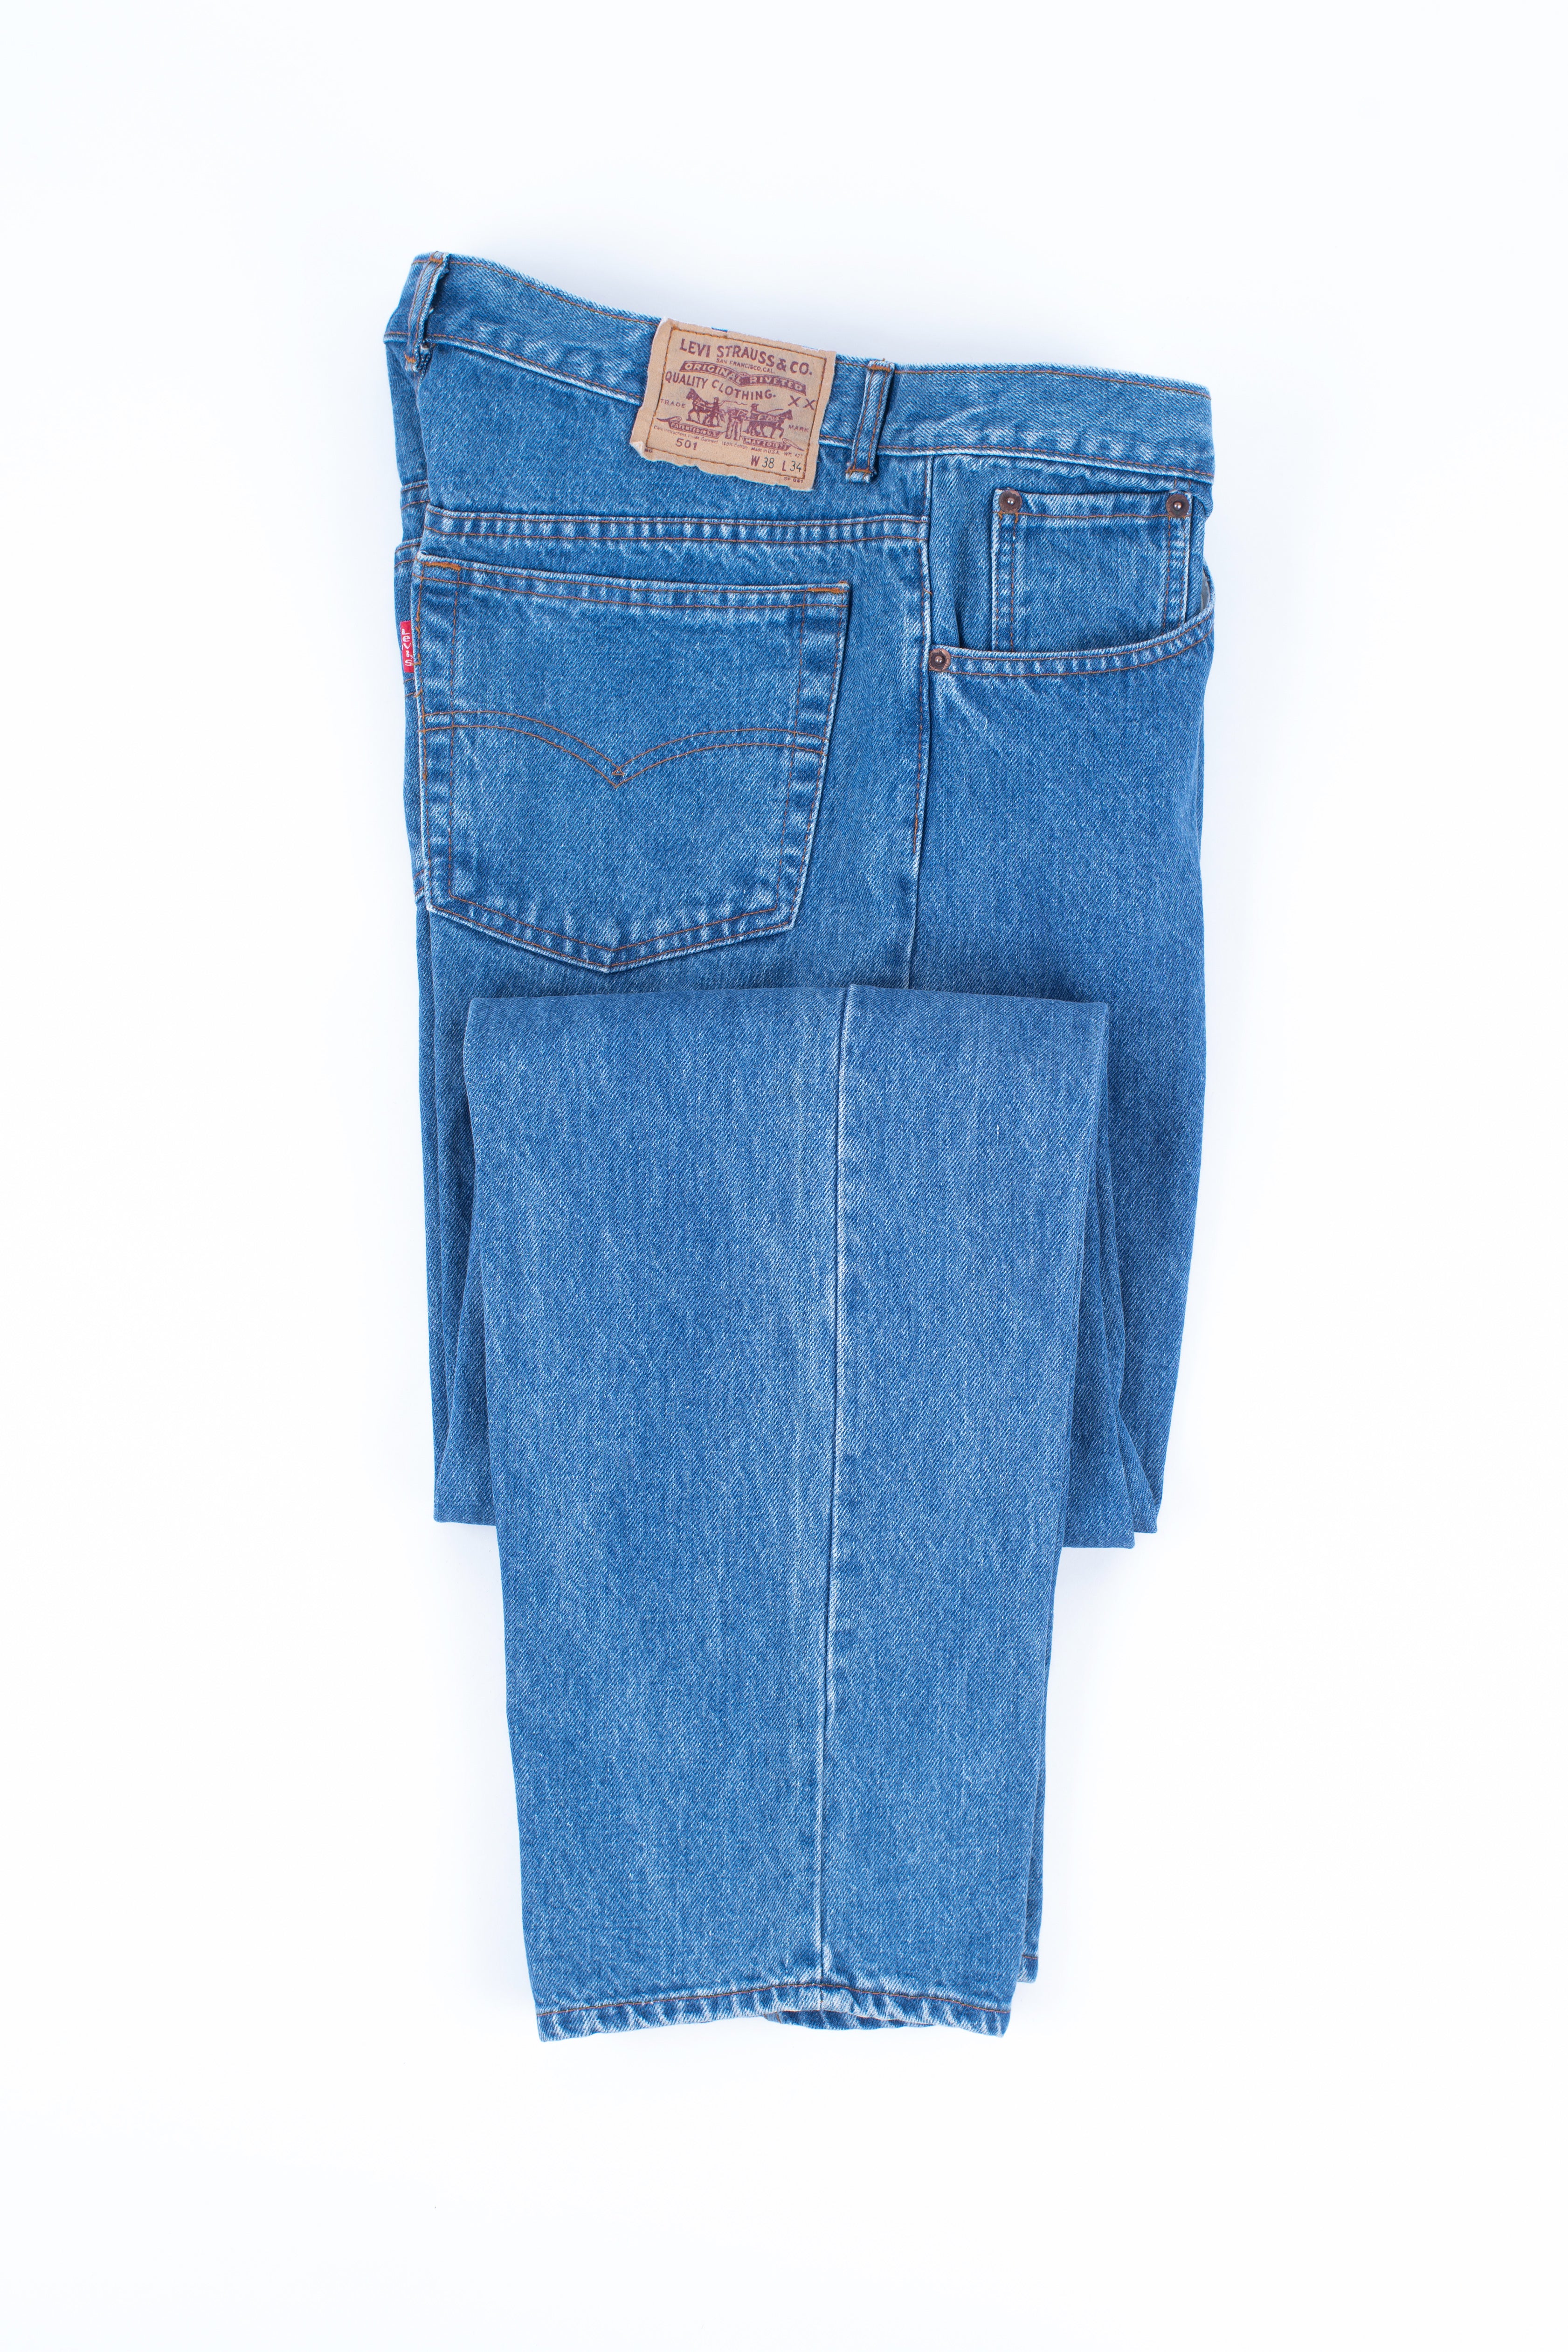 Levi’s 501 Men’s Vintage Blue Jeans Made in USA, W38/L34